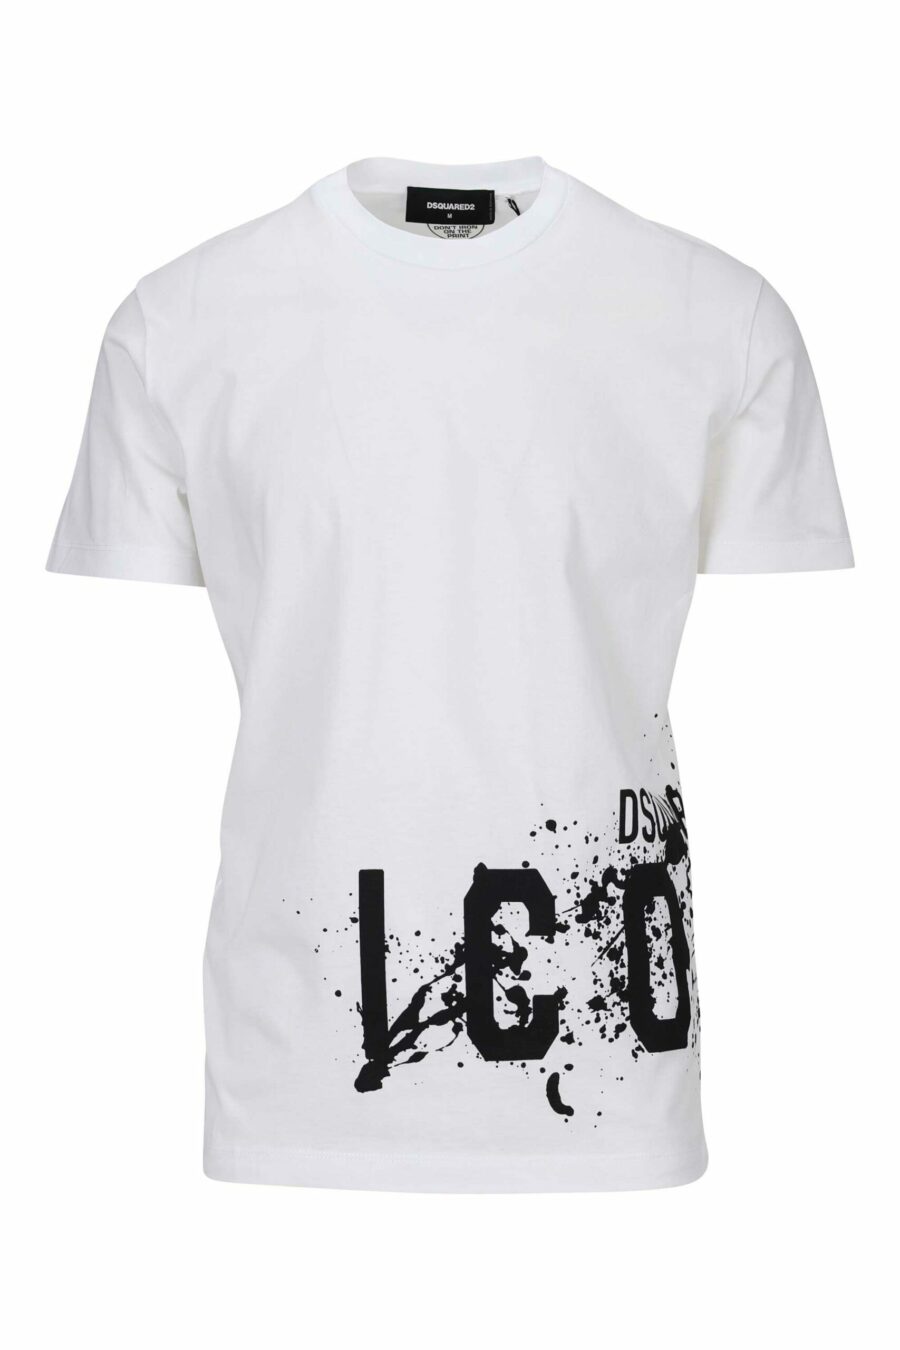 Camiseta blanca con maxilogo "icon splash" bajo - 8054148358549 scaled